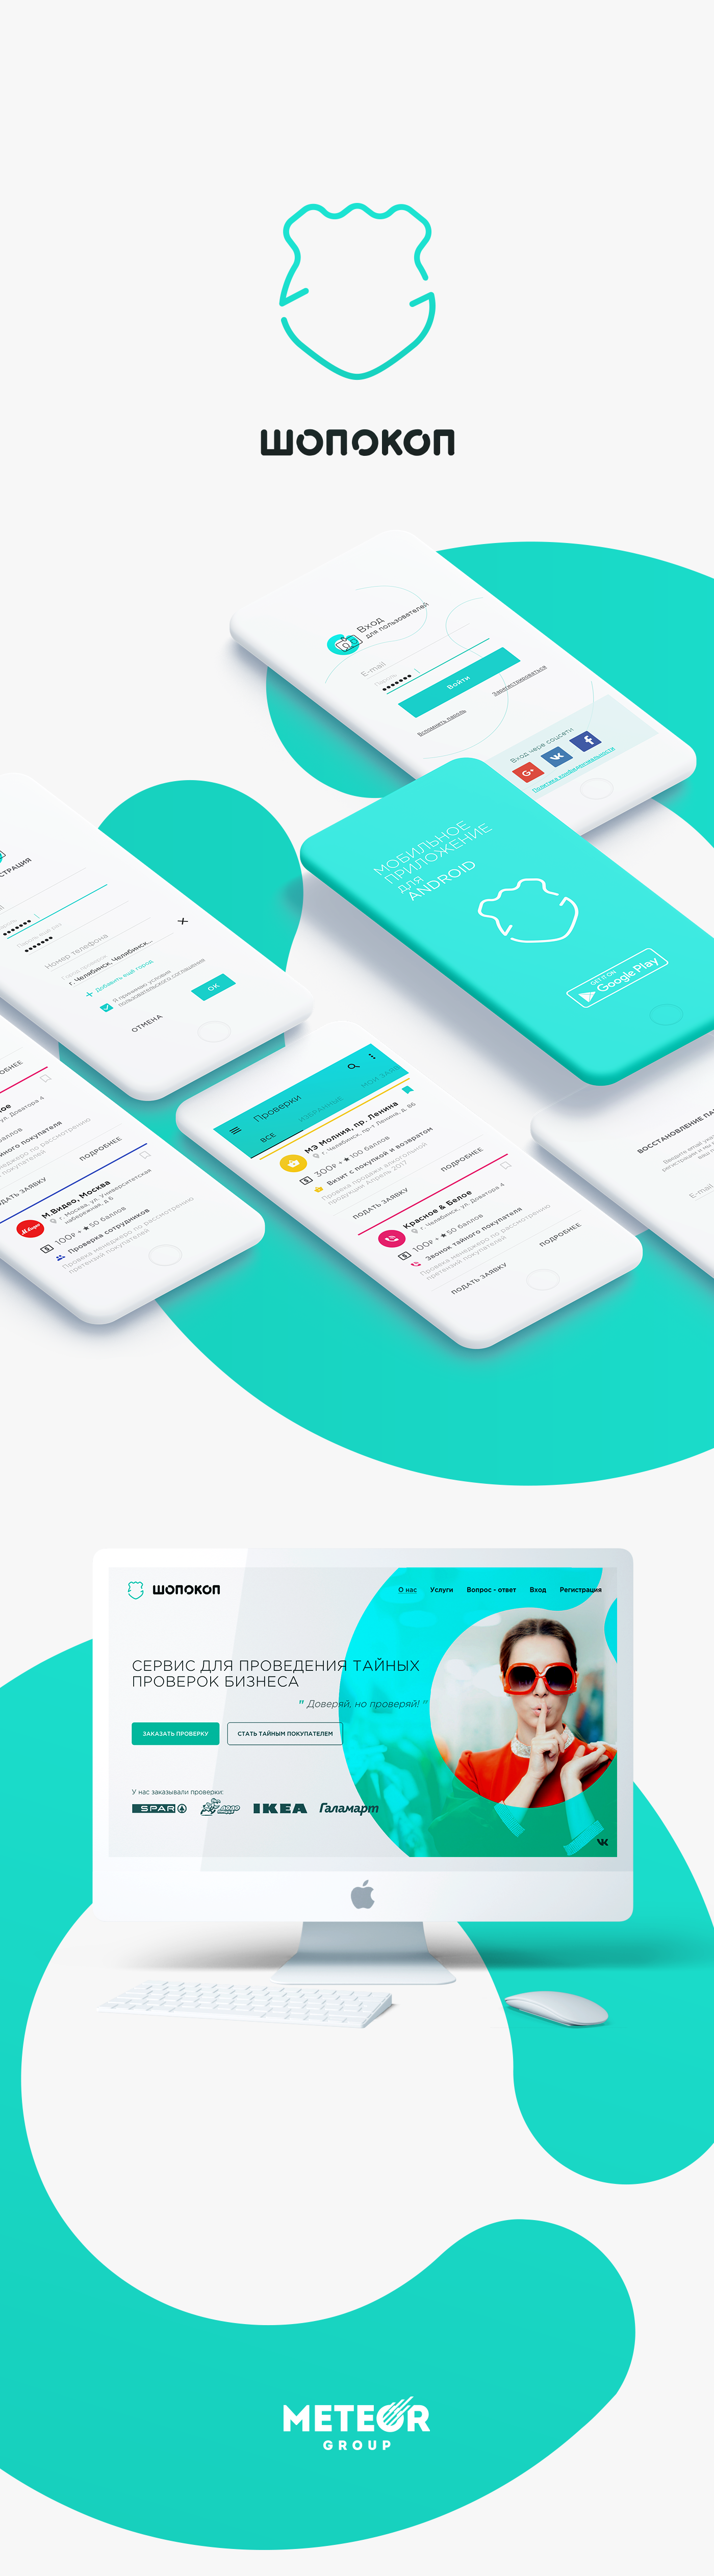 UI ux Webdesign Mobile app